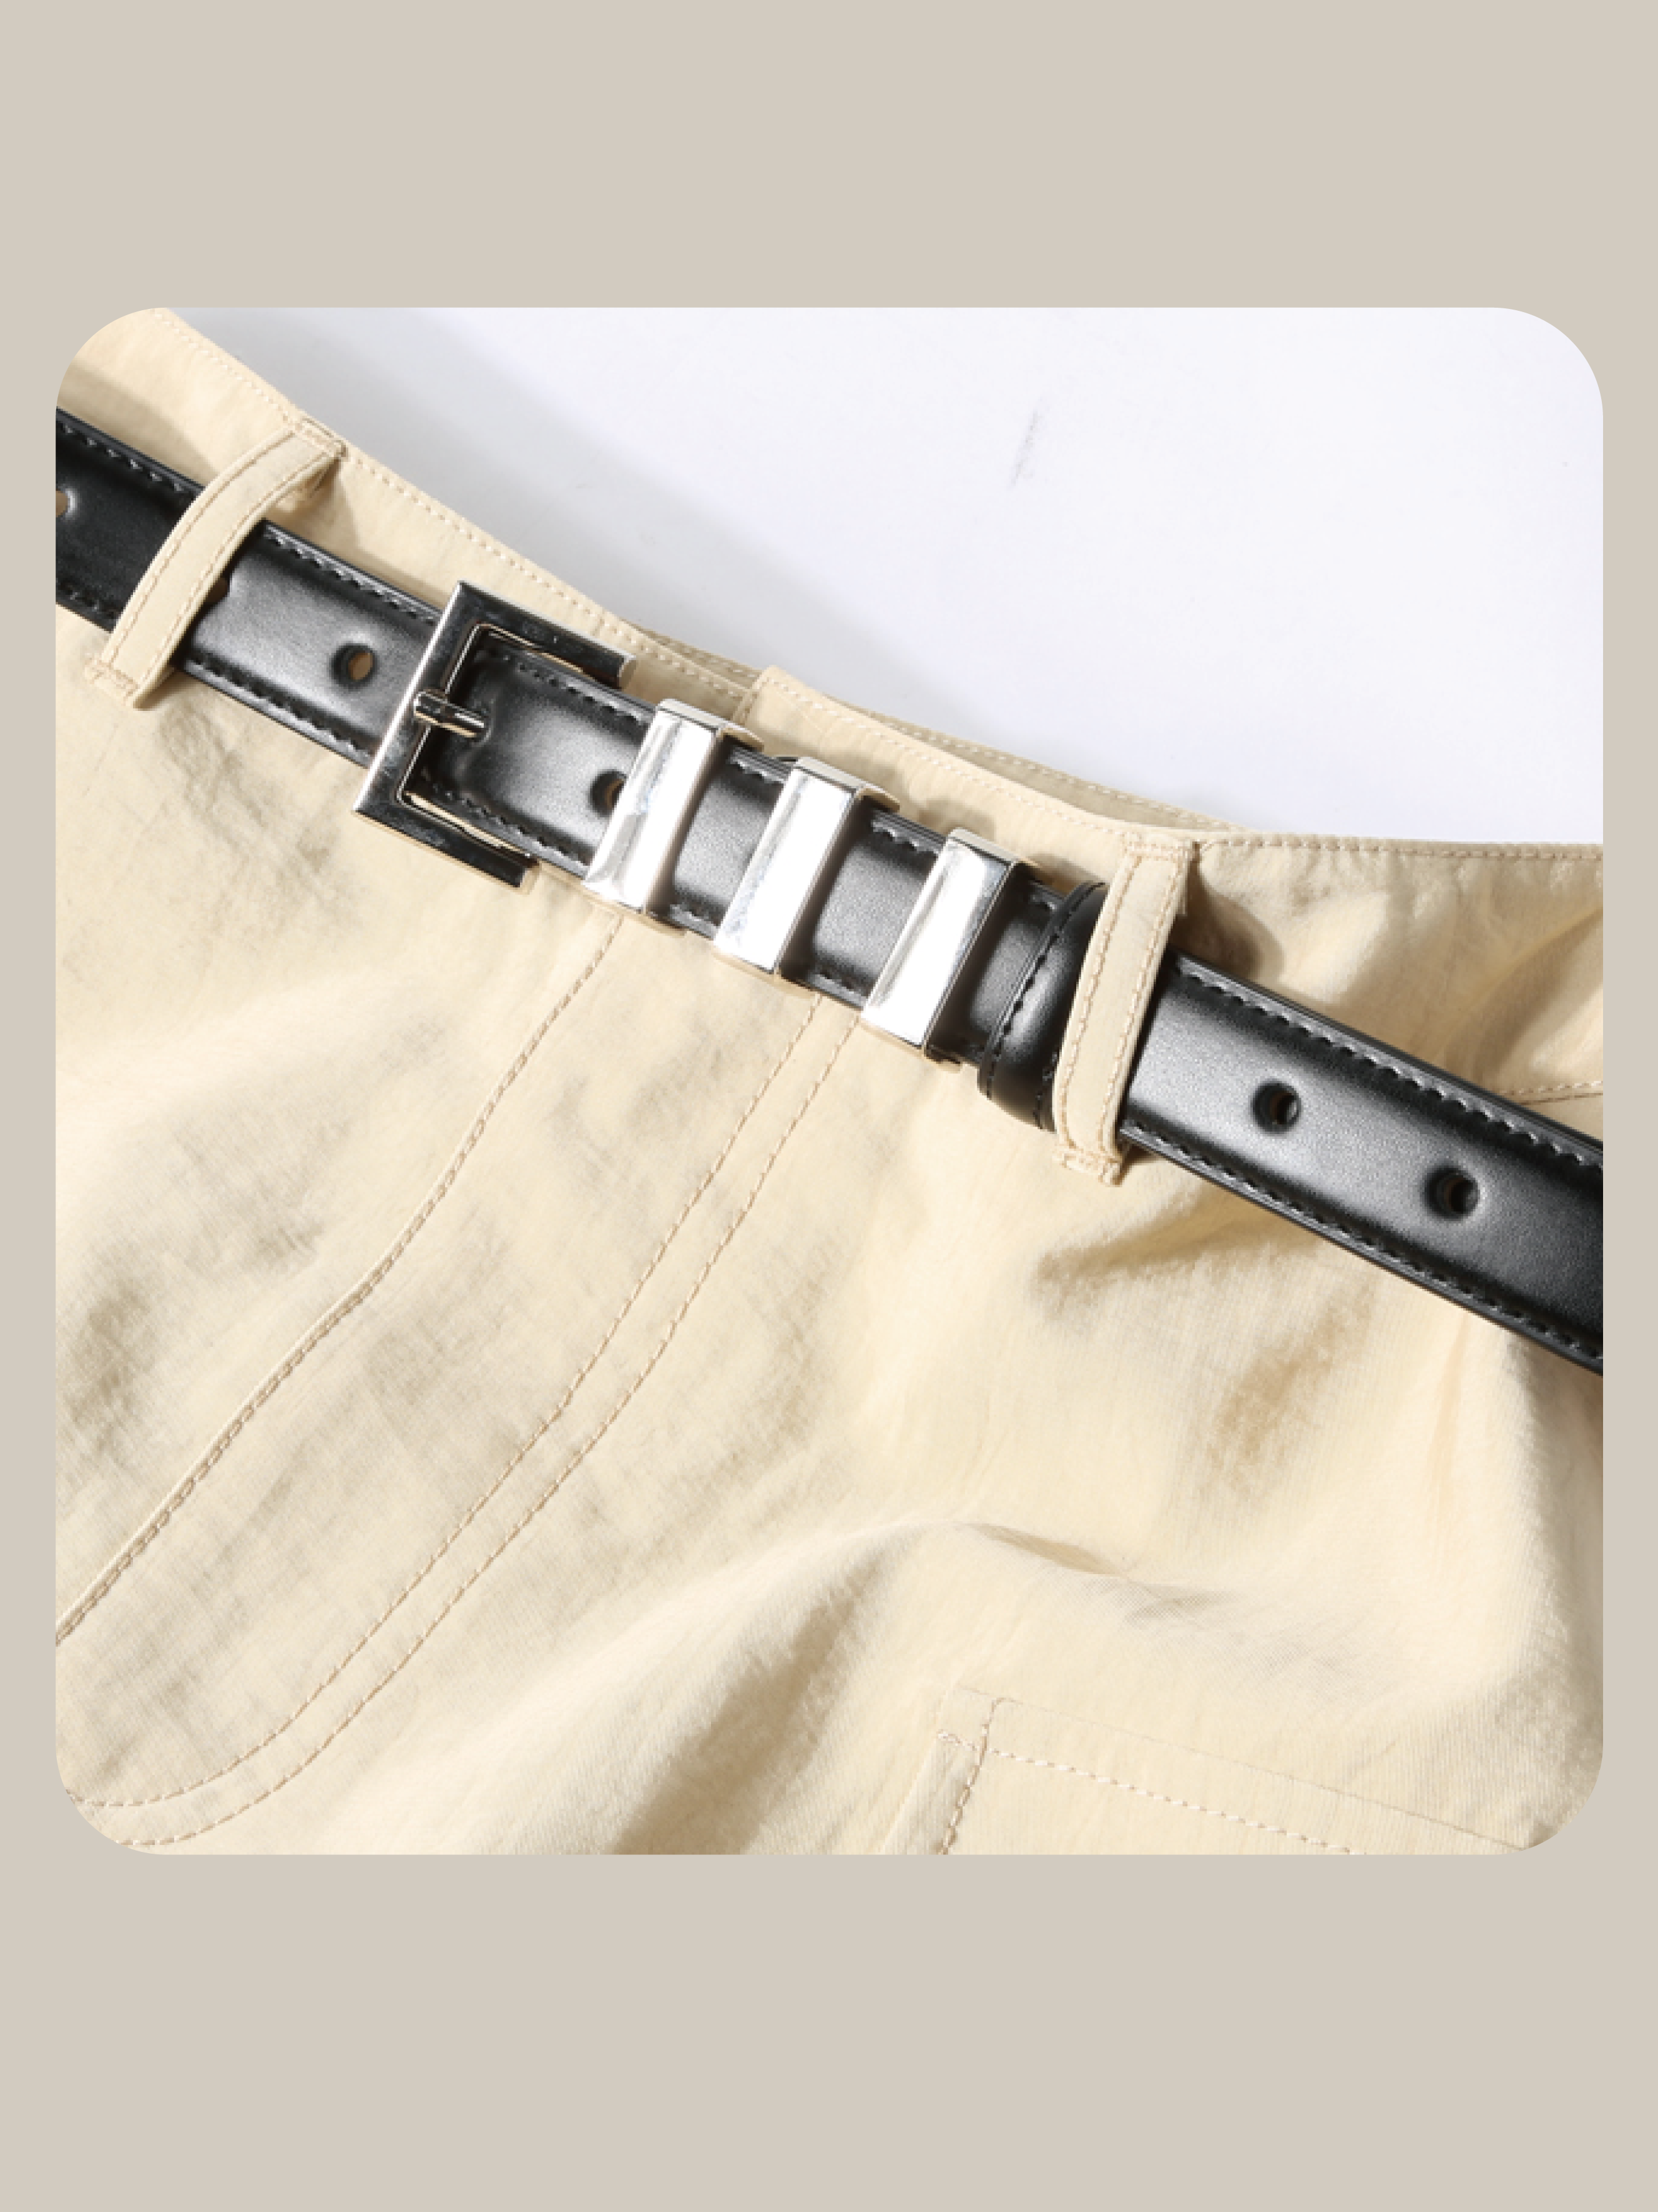 Double Pocket Mini Skirt With Belt/ベルト付きダブルポケットミニスカート